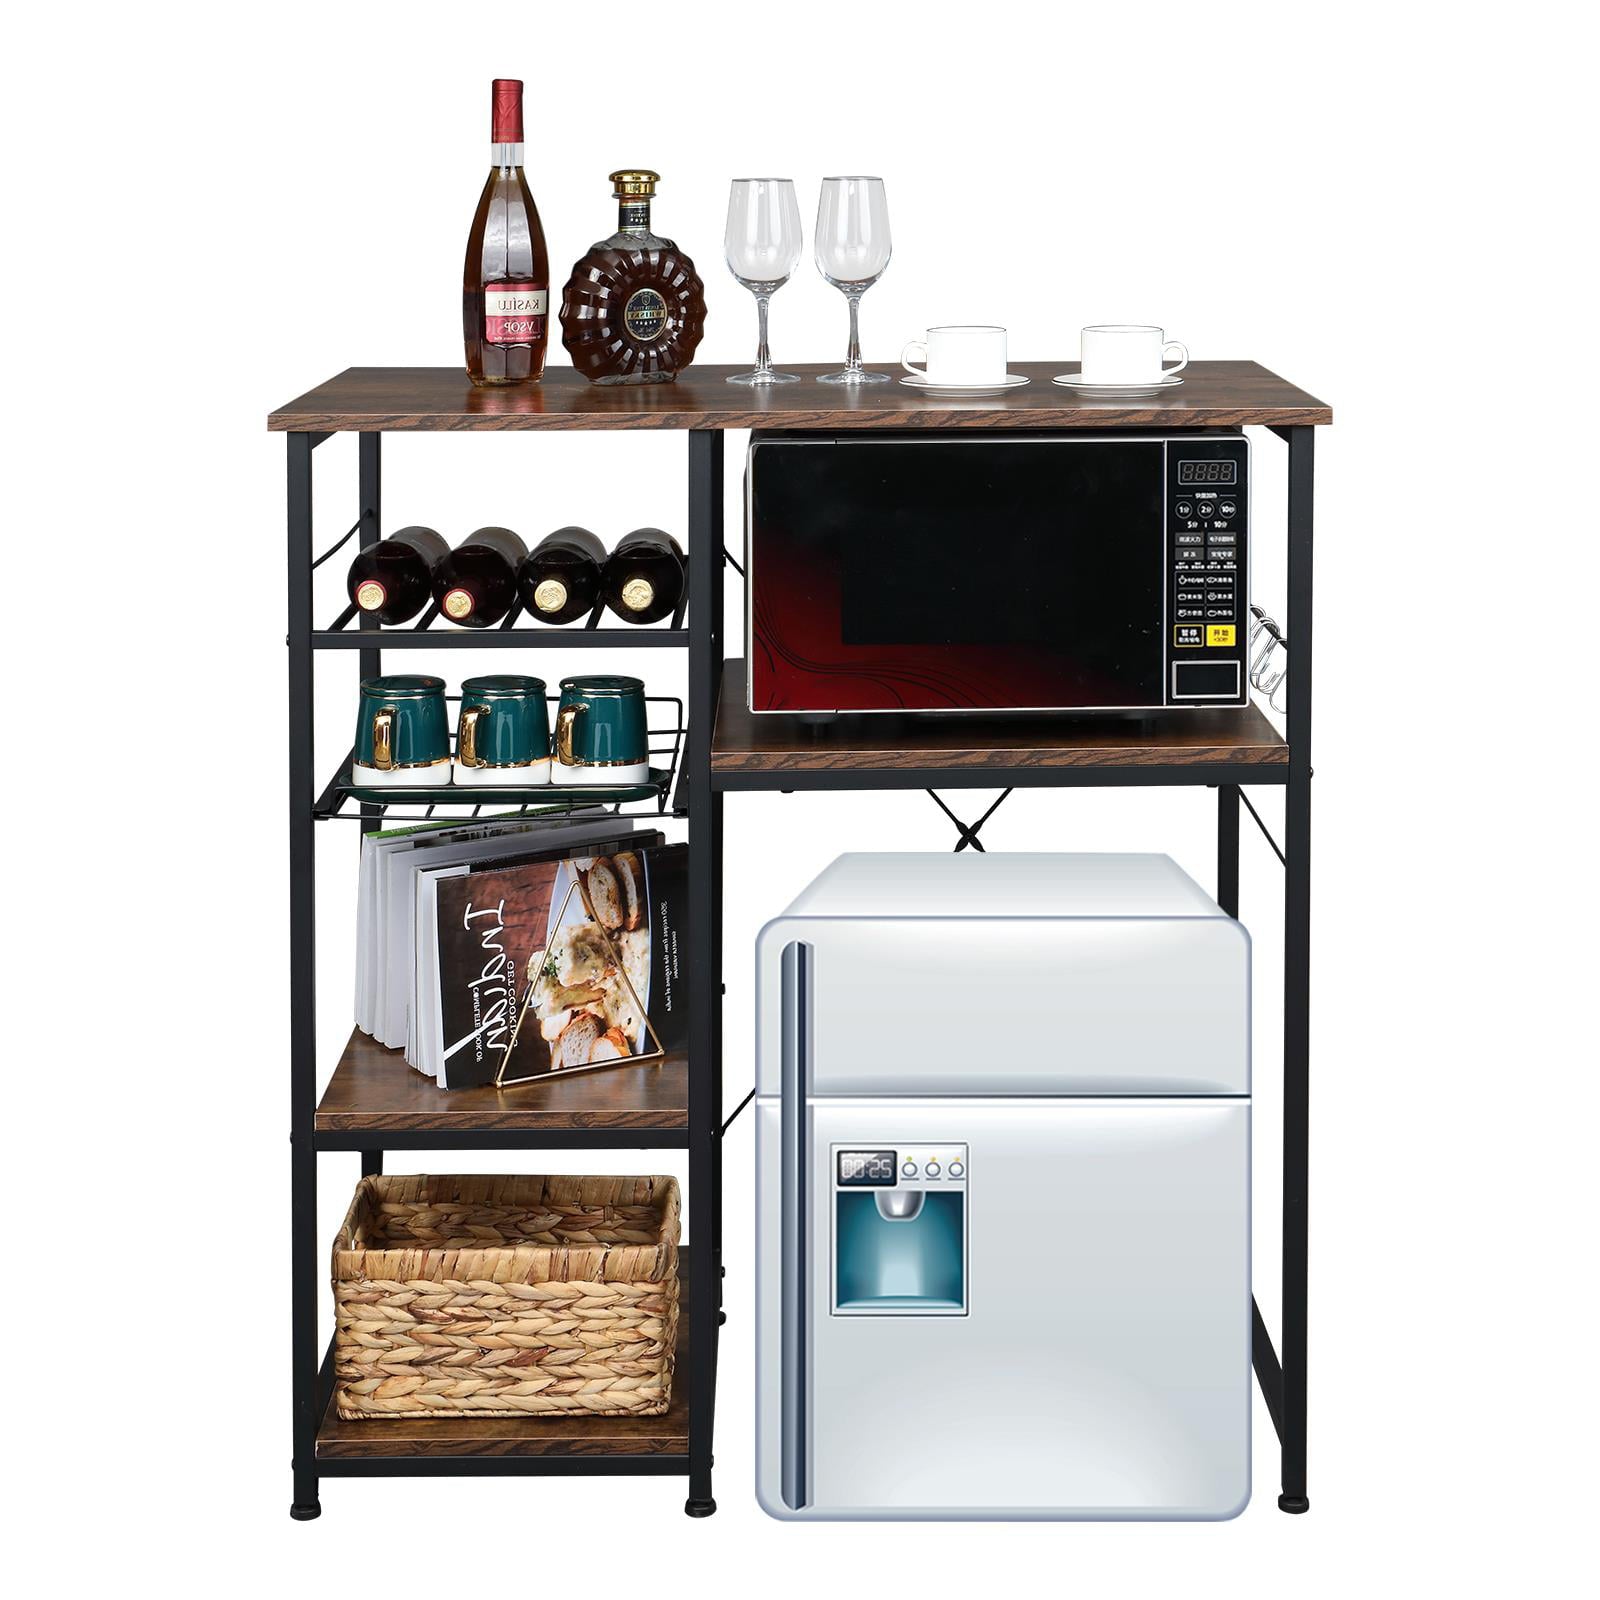 Ktaxon 5-Tier Kitchen Baker's Rack， Industrial Microwave Oven Stand Fit Mini Fridge， Bar Cart， Kitchen Utility Cart Storage Shelf Organizer with Big Drawer and Wine Rack/Drain Basket